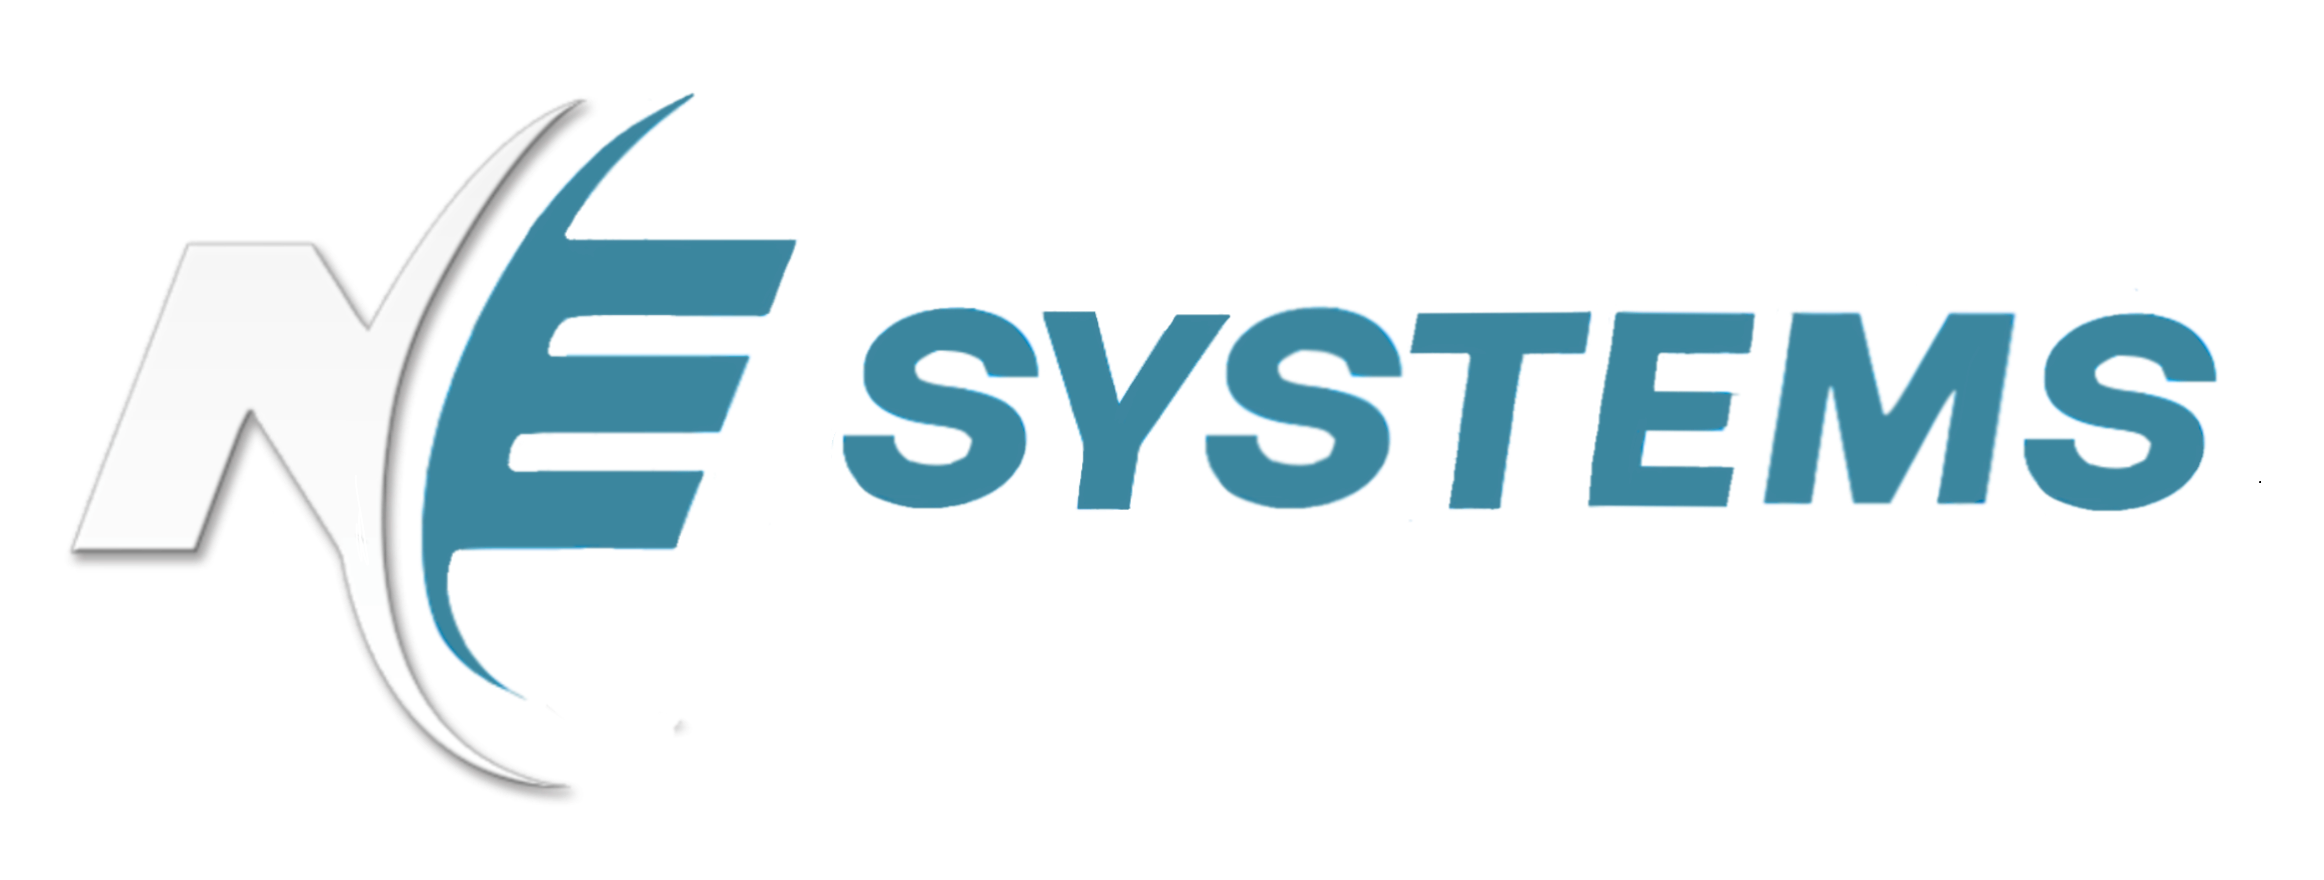 NE Systems Logo